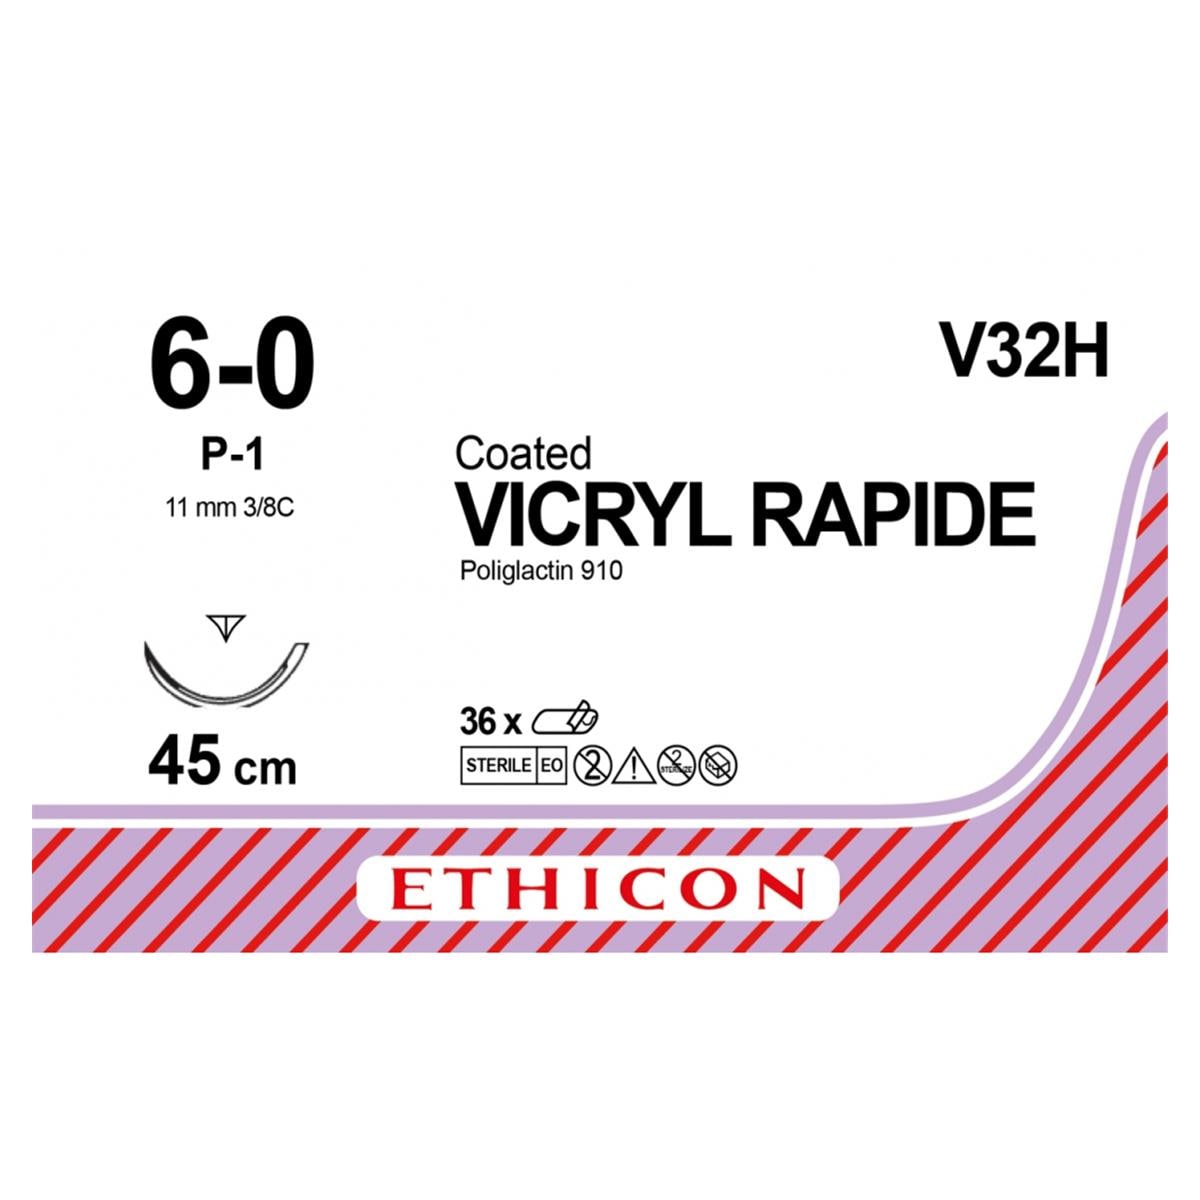 VICRYL rapide violett, geflochten - Nadeltyp PRIME P1 - USP 6-0, Länge 0,45 m (V 32 H), Packung 36 Stück